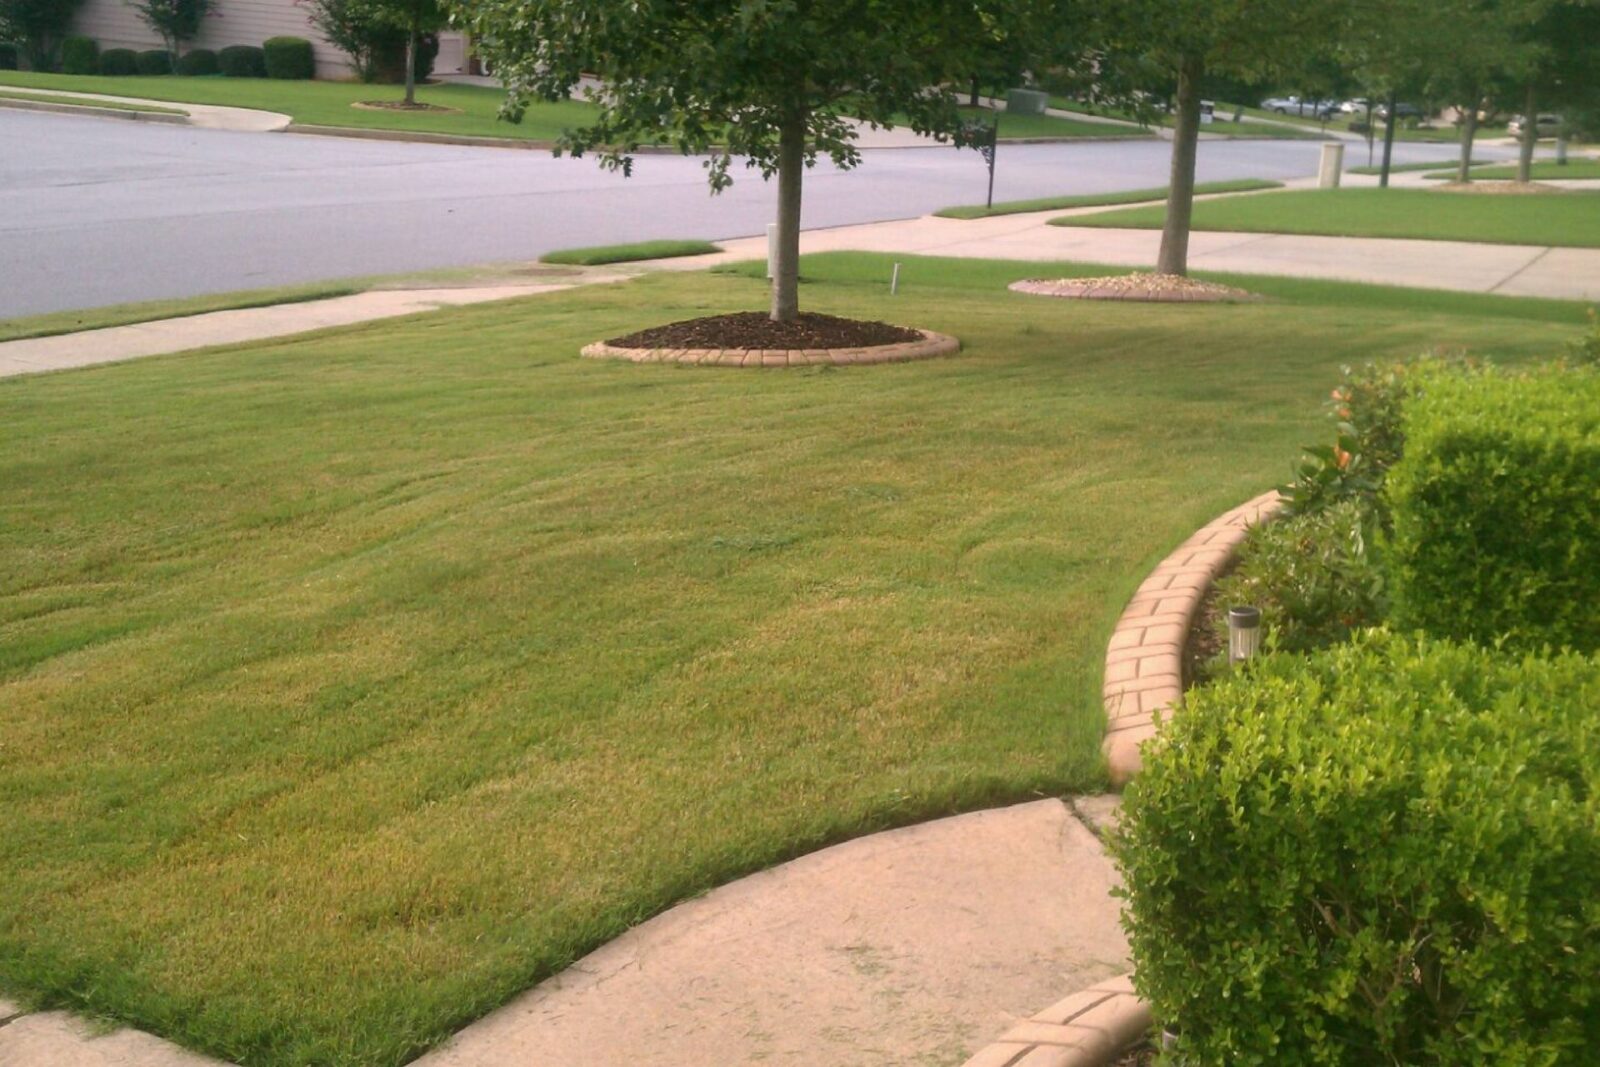 modern front yard landscaping